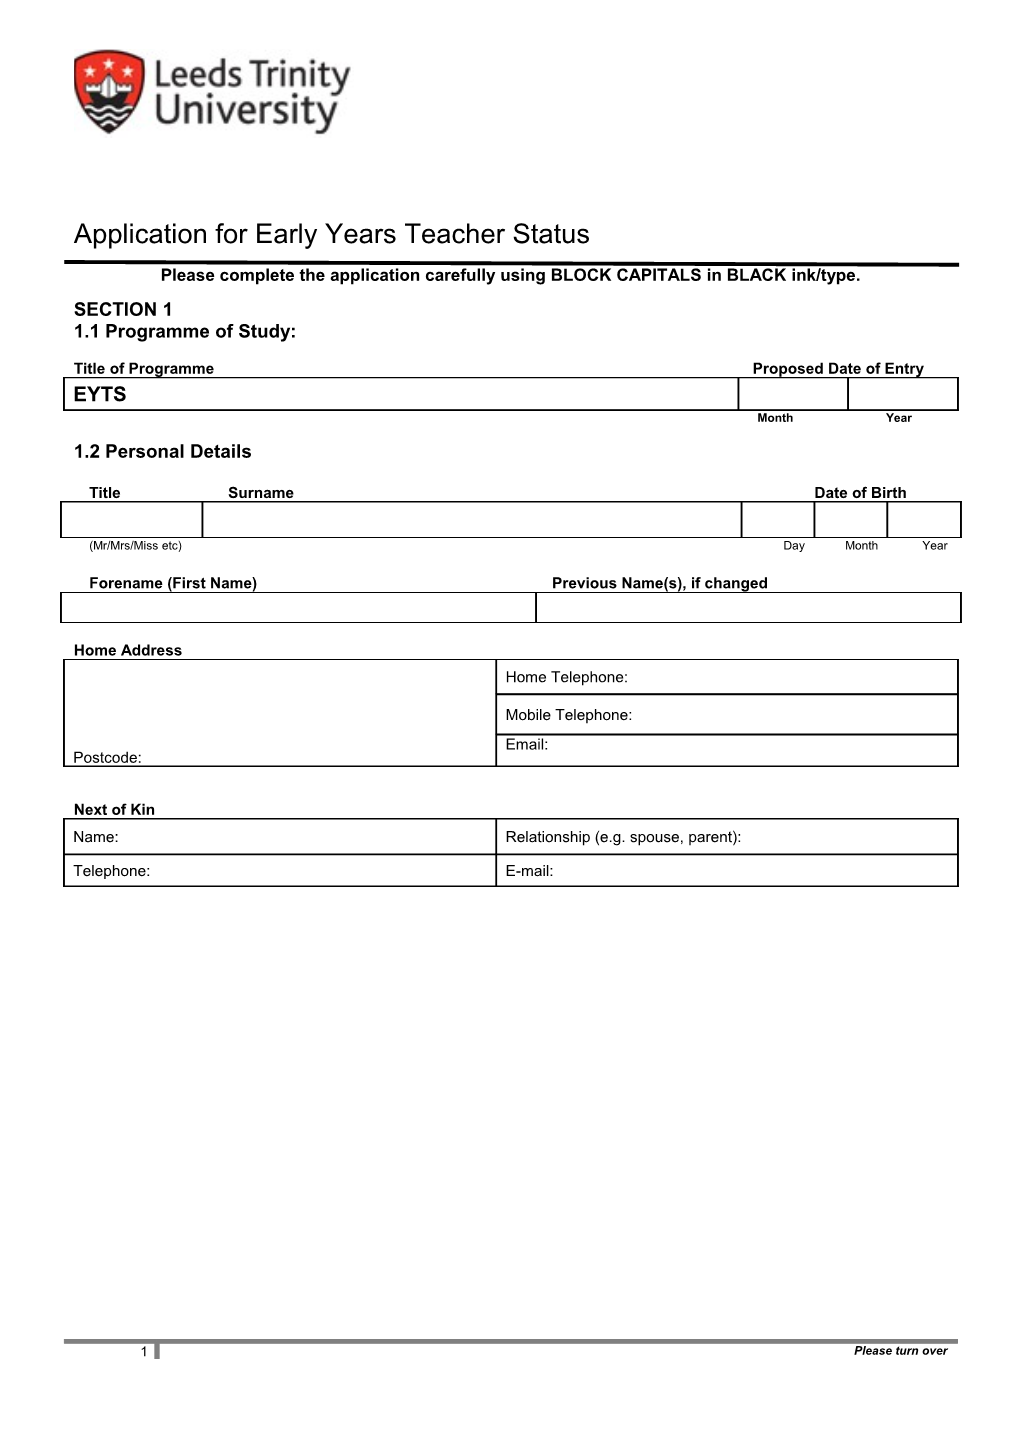 EYTS Application Form